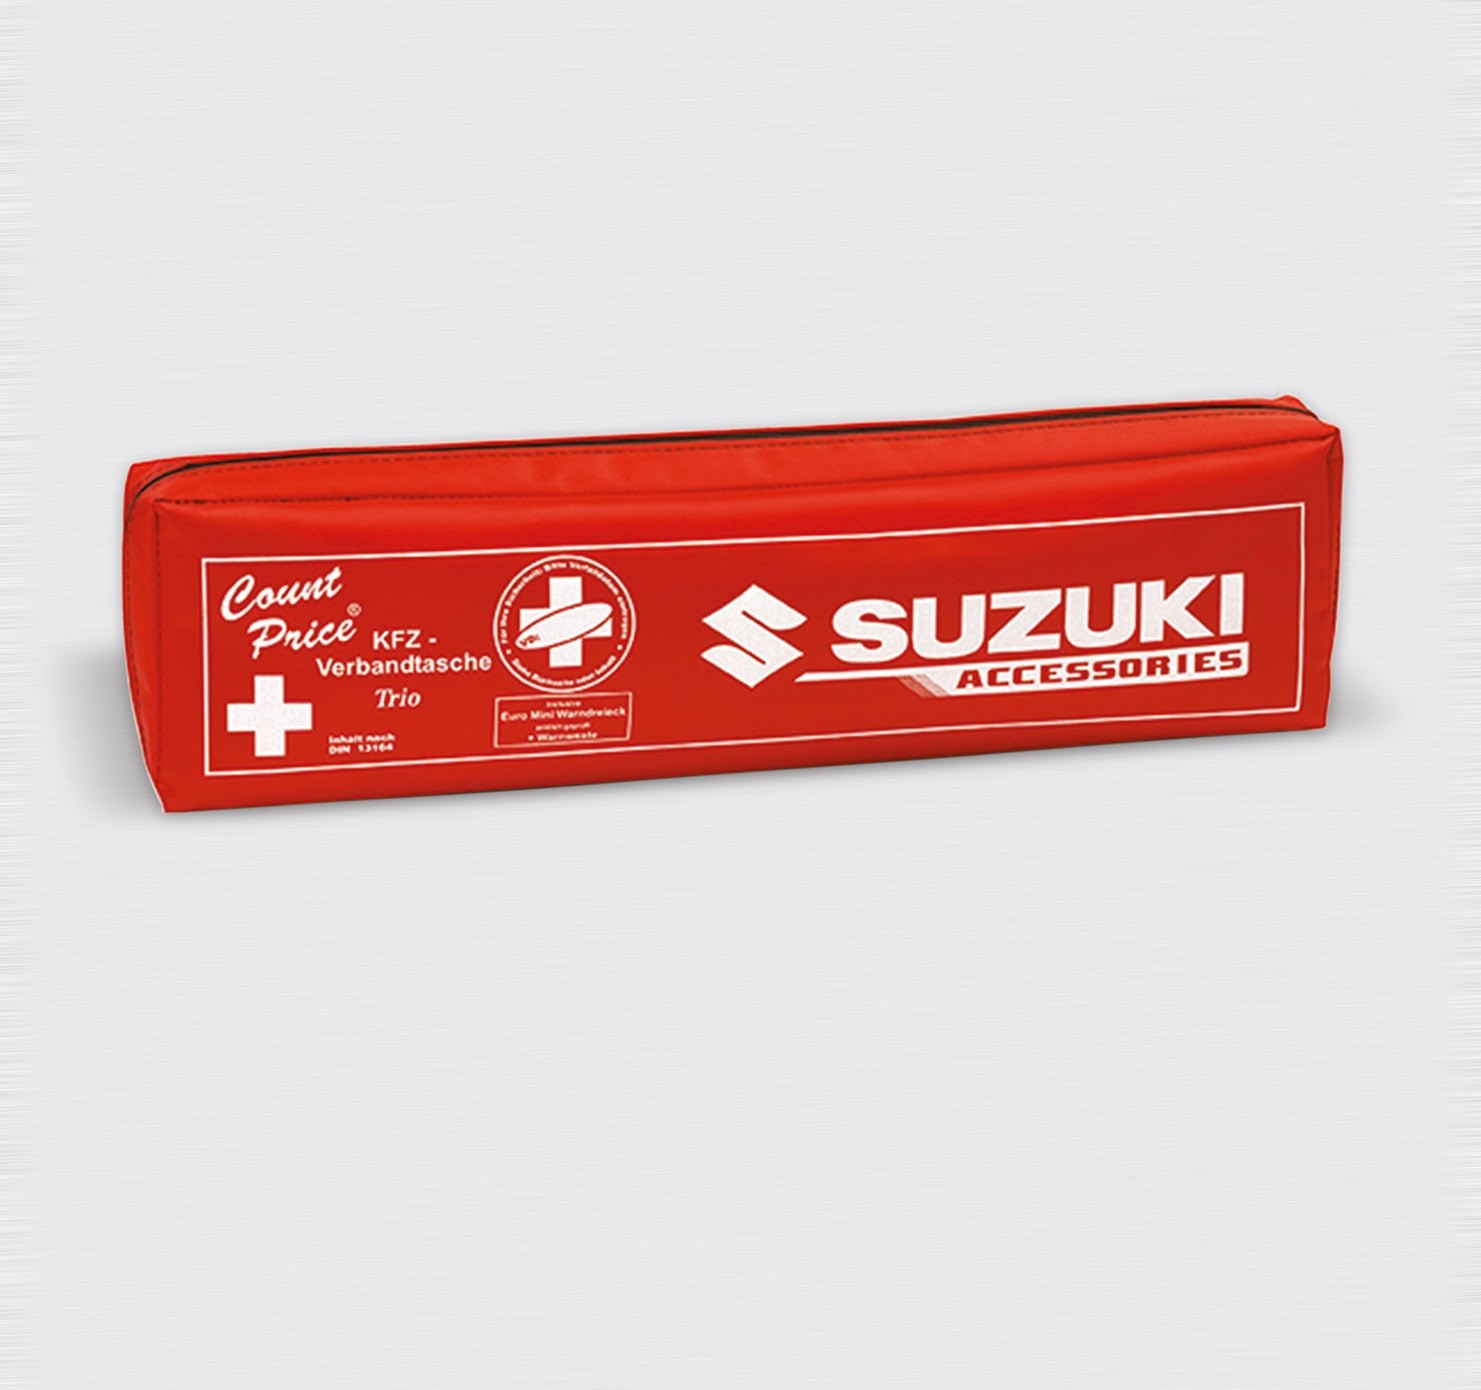 Suzuki Erste-Hilfe-Set inkl. Warnweste